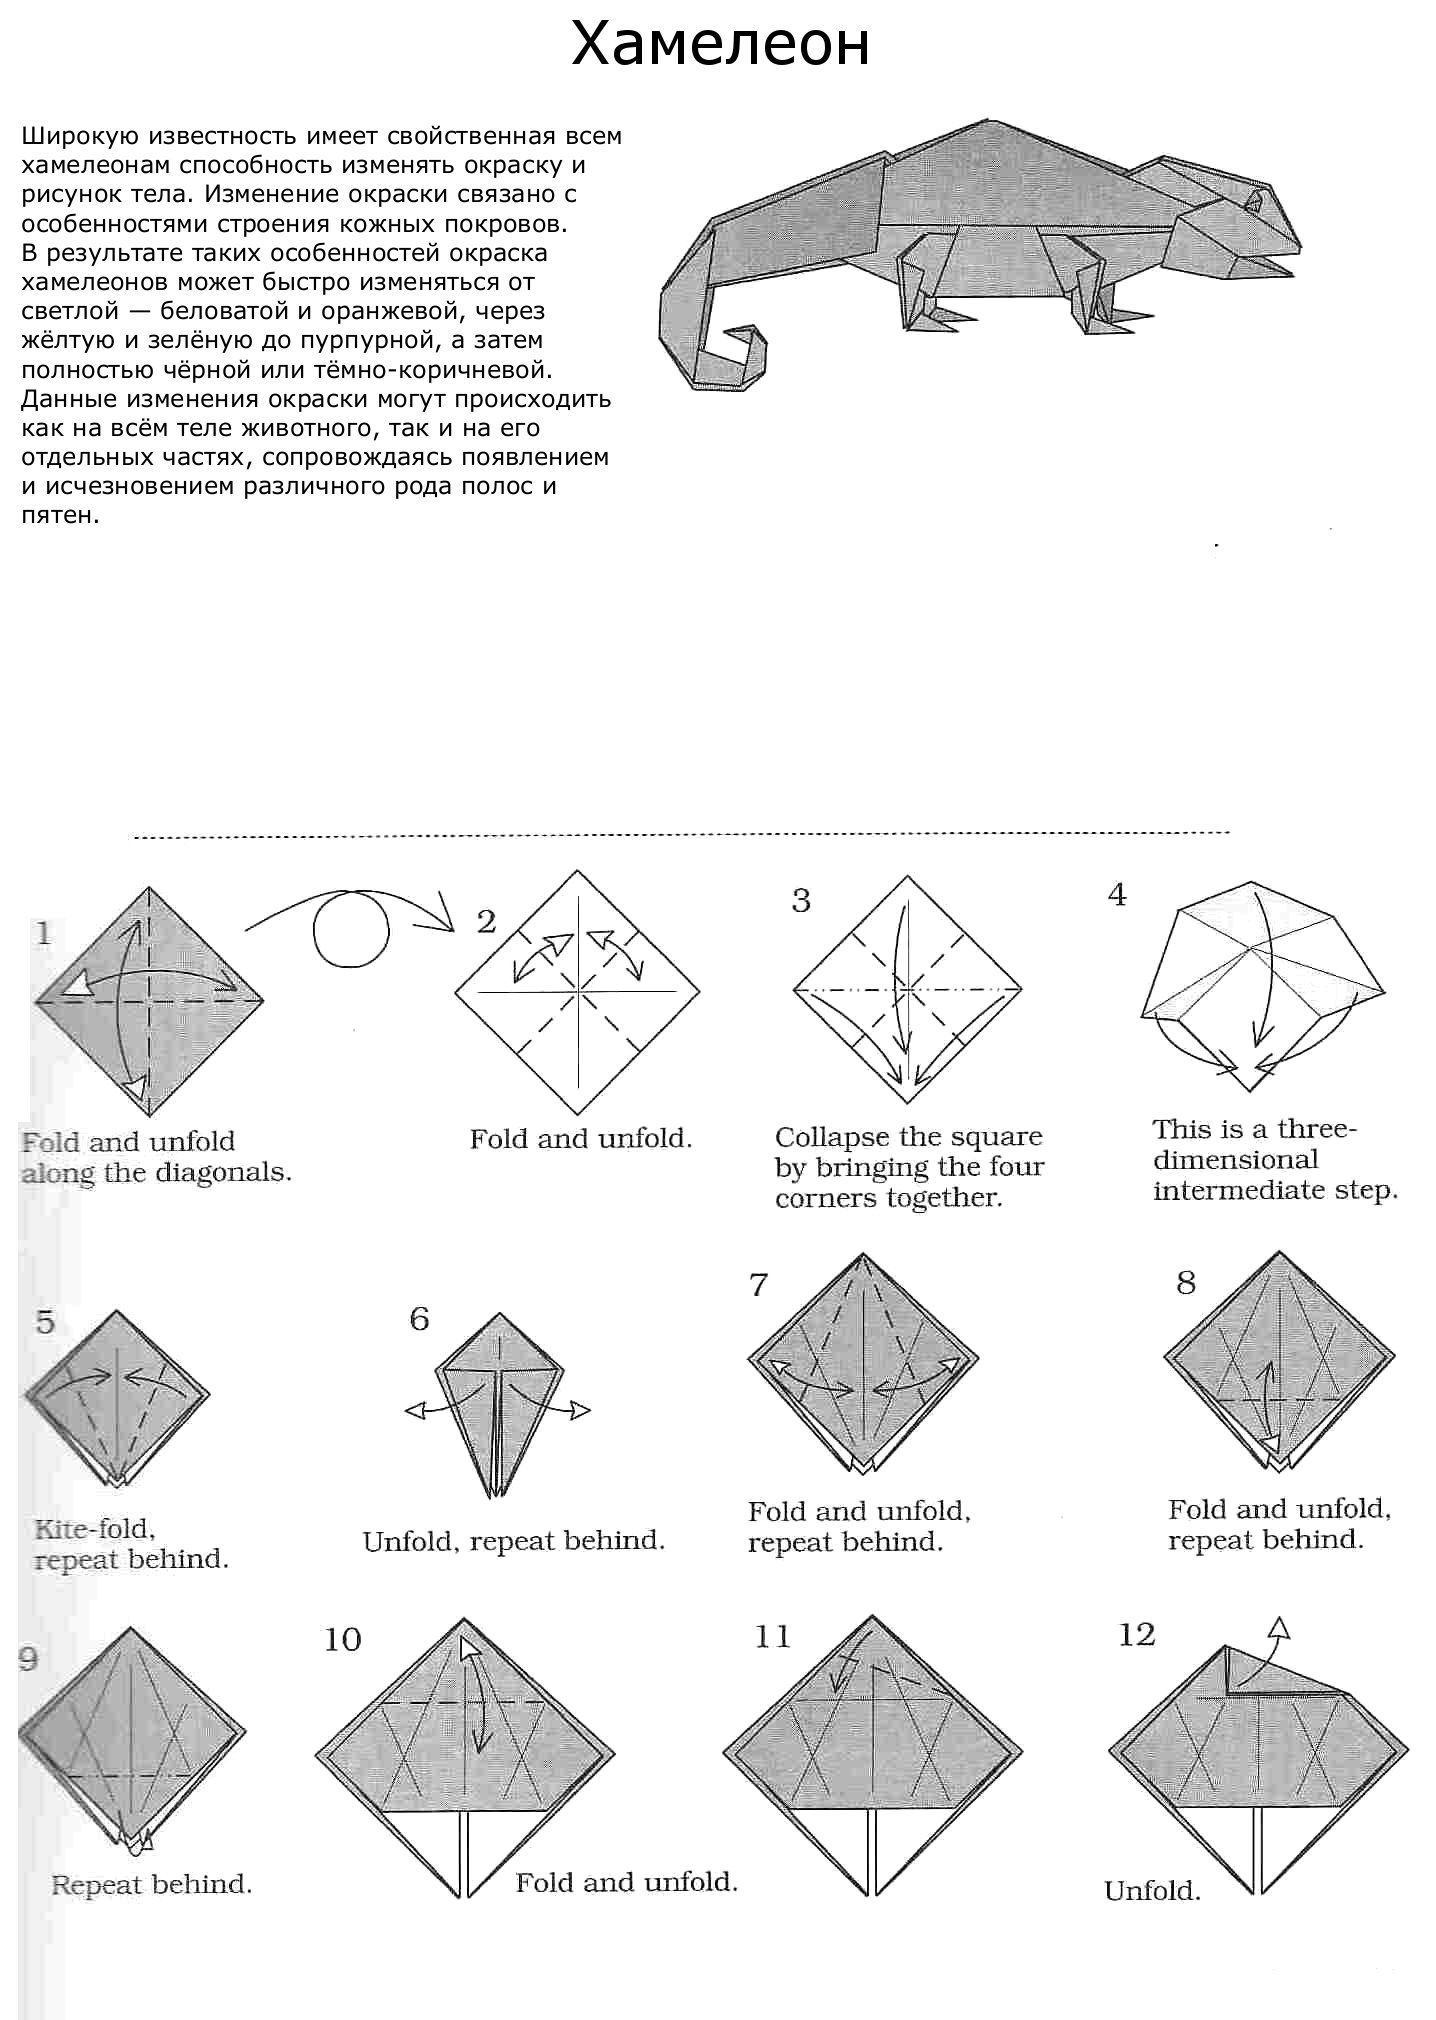 Хамелеон схема. Аксолотль оригами схема. Оригами из бумаги. Оригами схемы. Оригами из бумаги схемы.